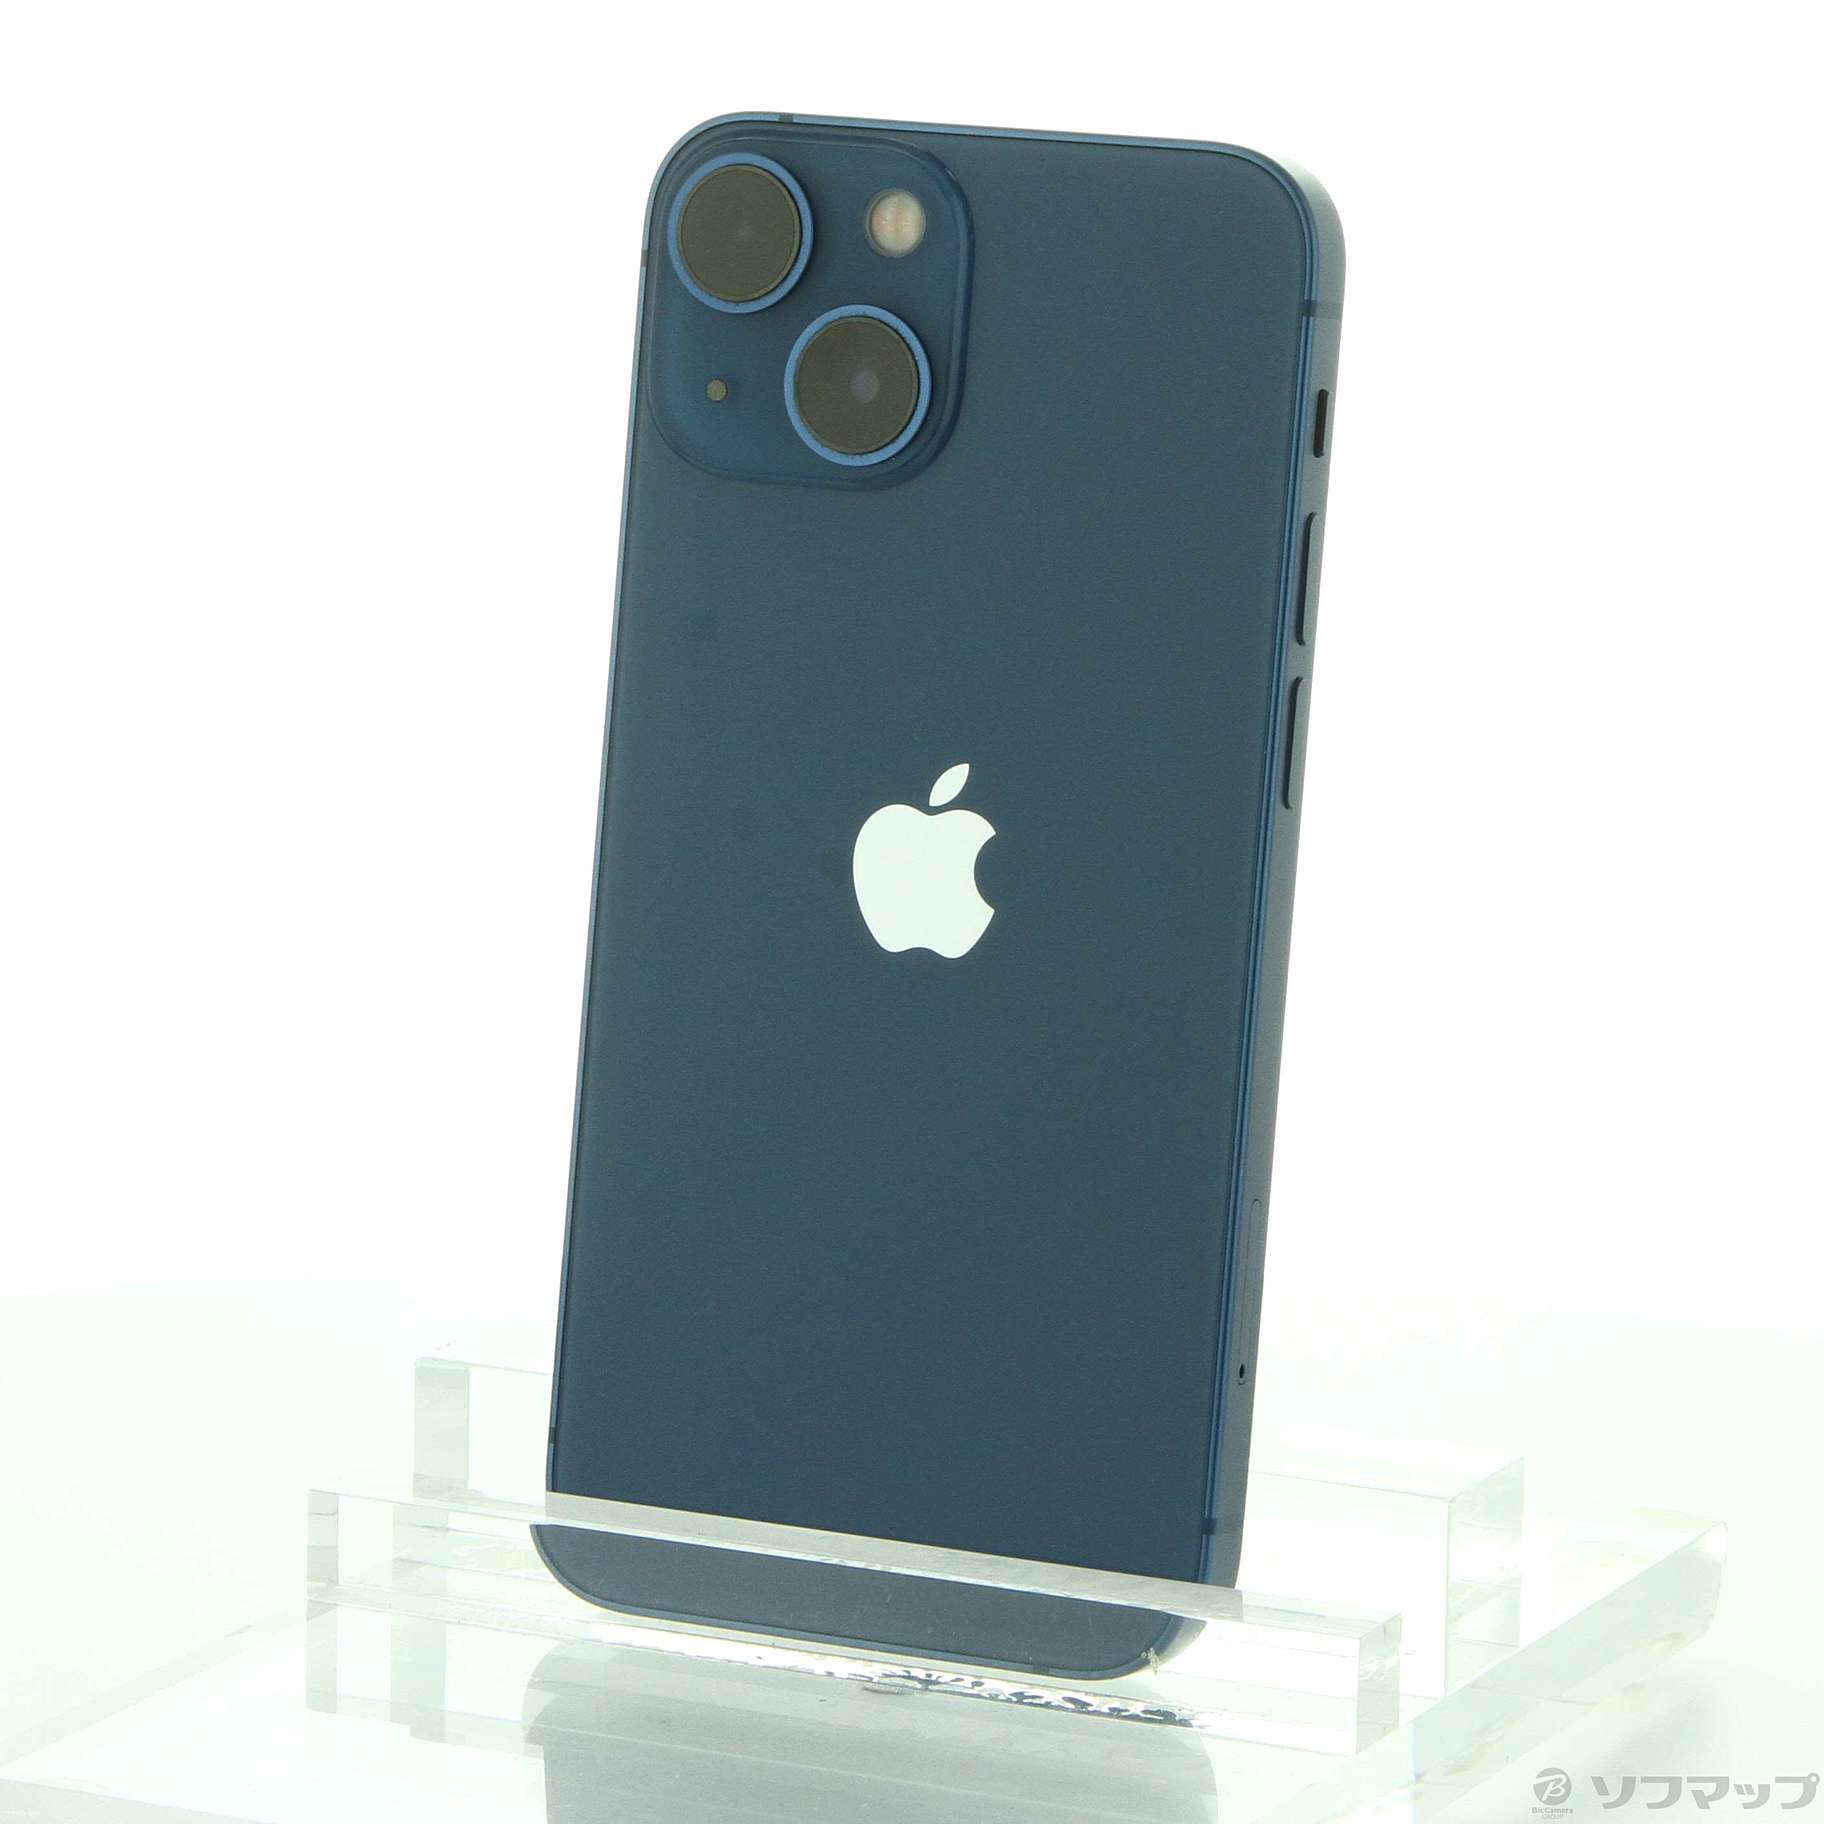 iPhone 13 mini 256GB SIMフリー [ブルー] 中古(白ロム)価格比較